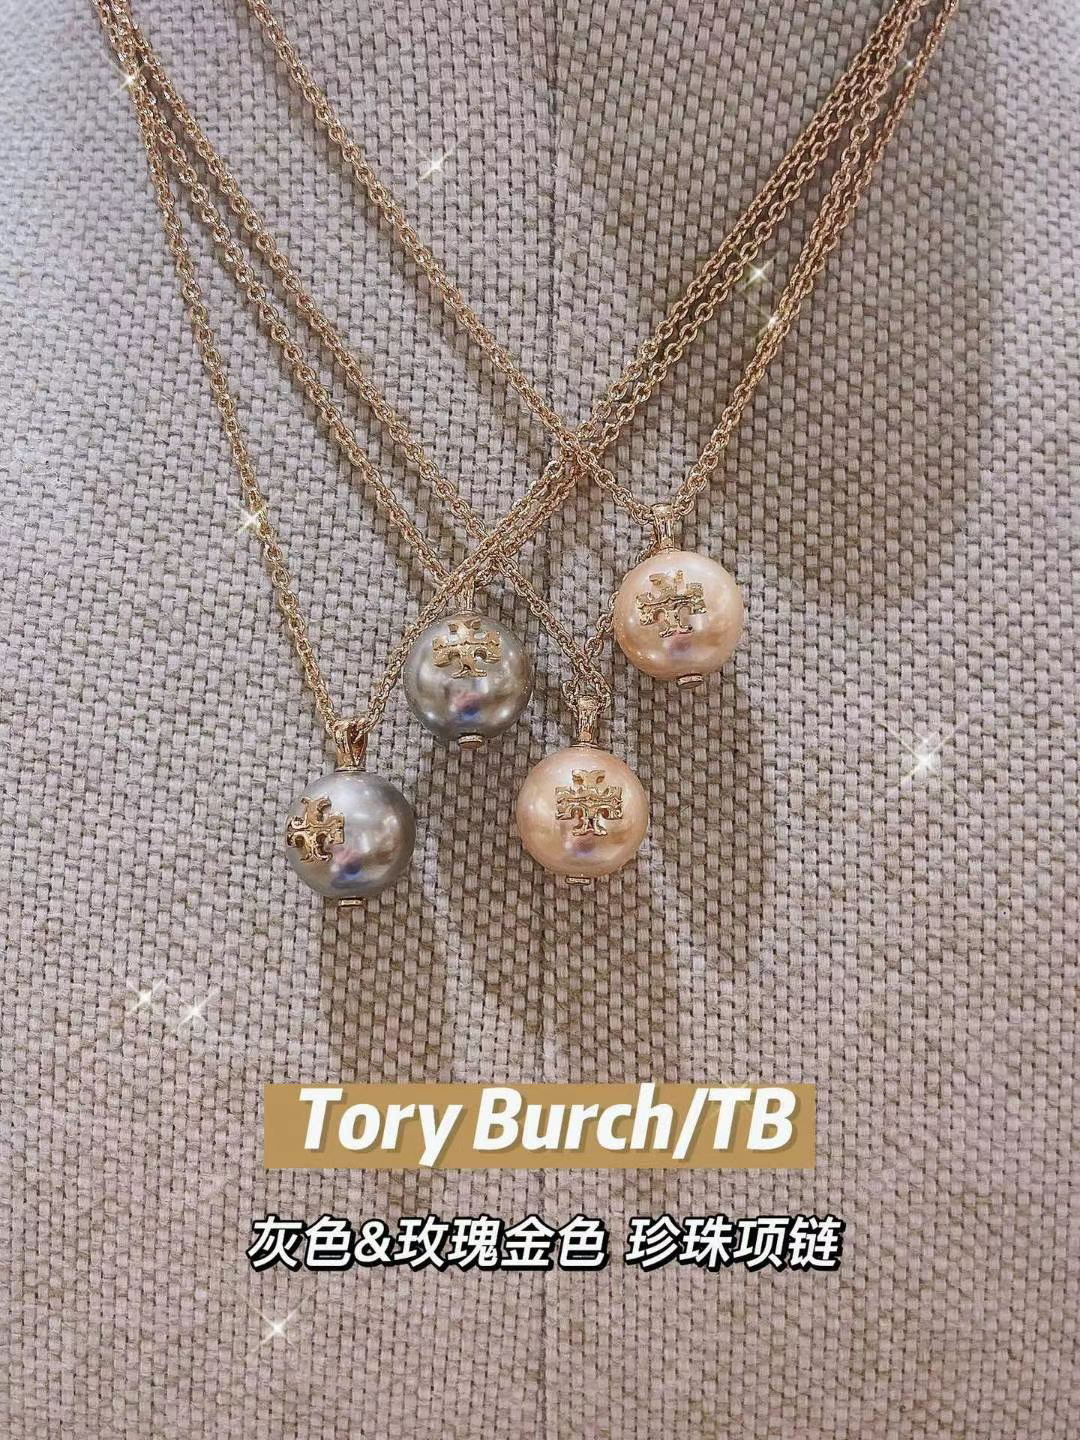 Tory Burch最新炸弹💣珍珠项链🎀美美美✨性价比高于香奈儿太多哈[偷笑]漂亮典雅富贵，你值得拥有 [哇][哇]